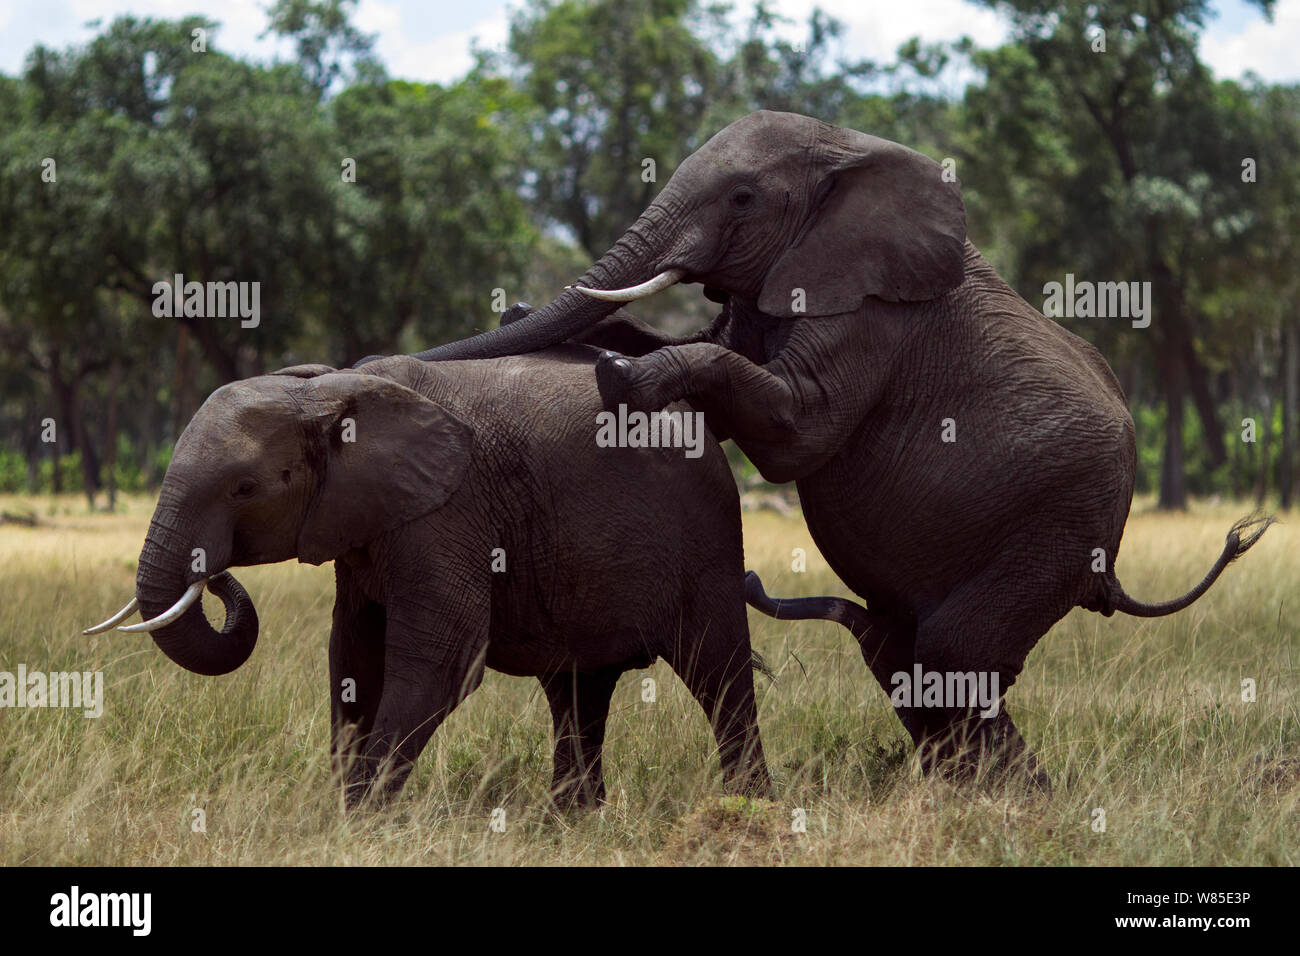 L'éléphant africain (Loxodonta africana) de sexe masculin, sans succès, l'accouplement avec une femelle. Masai Mara National Reserve, Kenya. Feb 2012. Banque D'Images